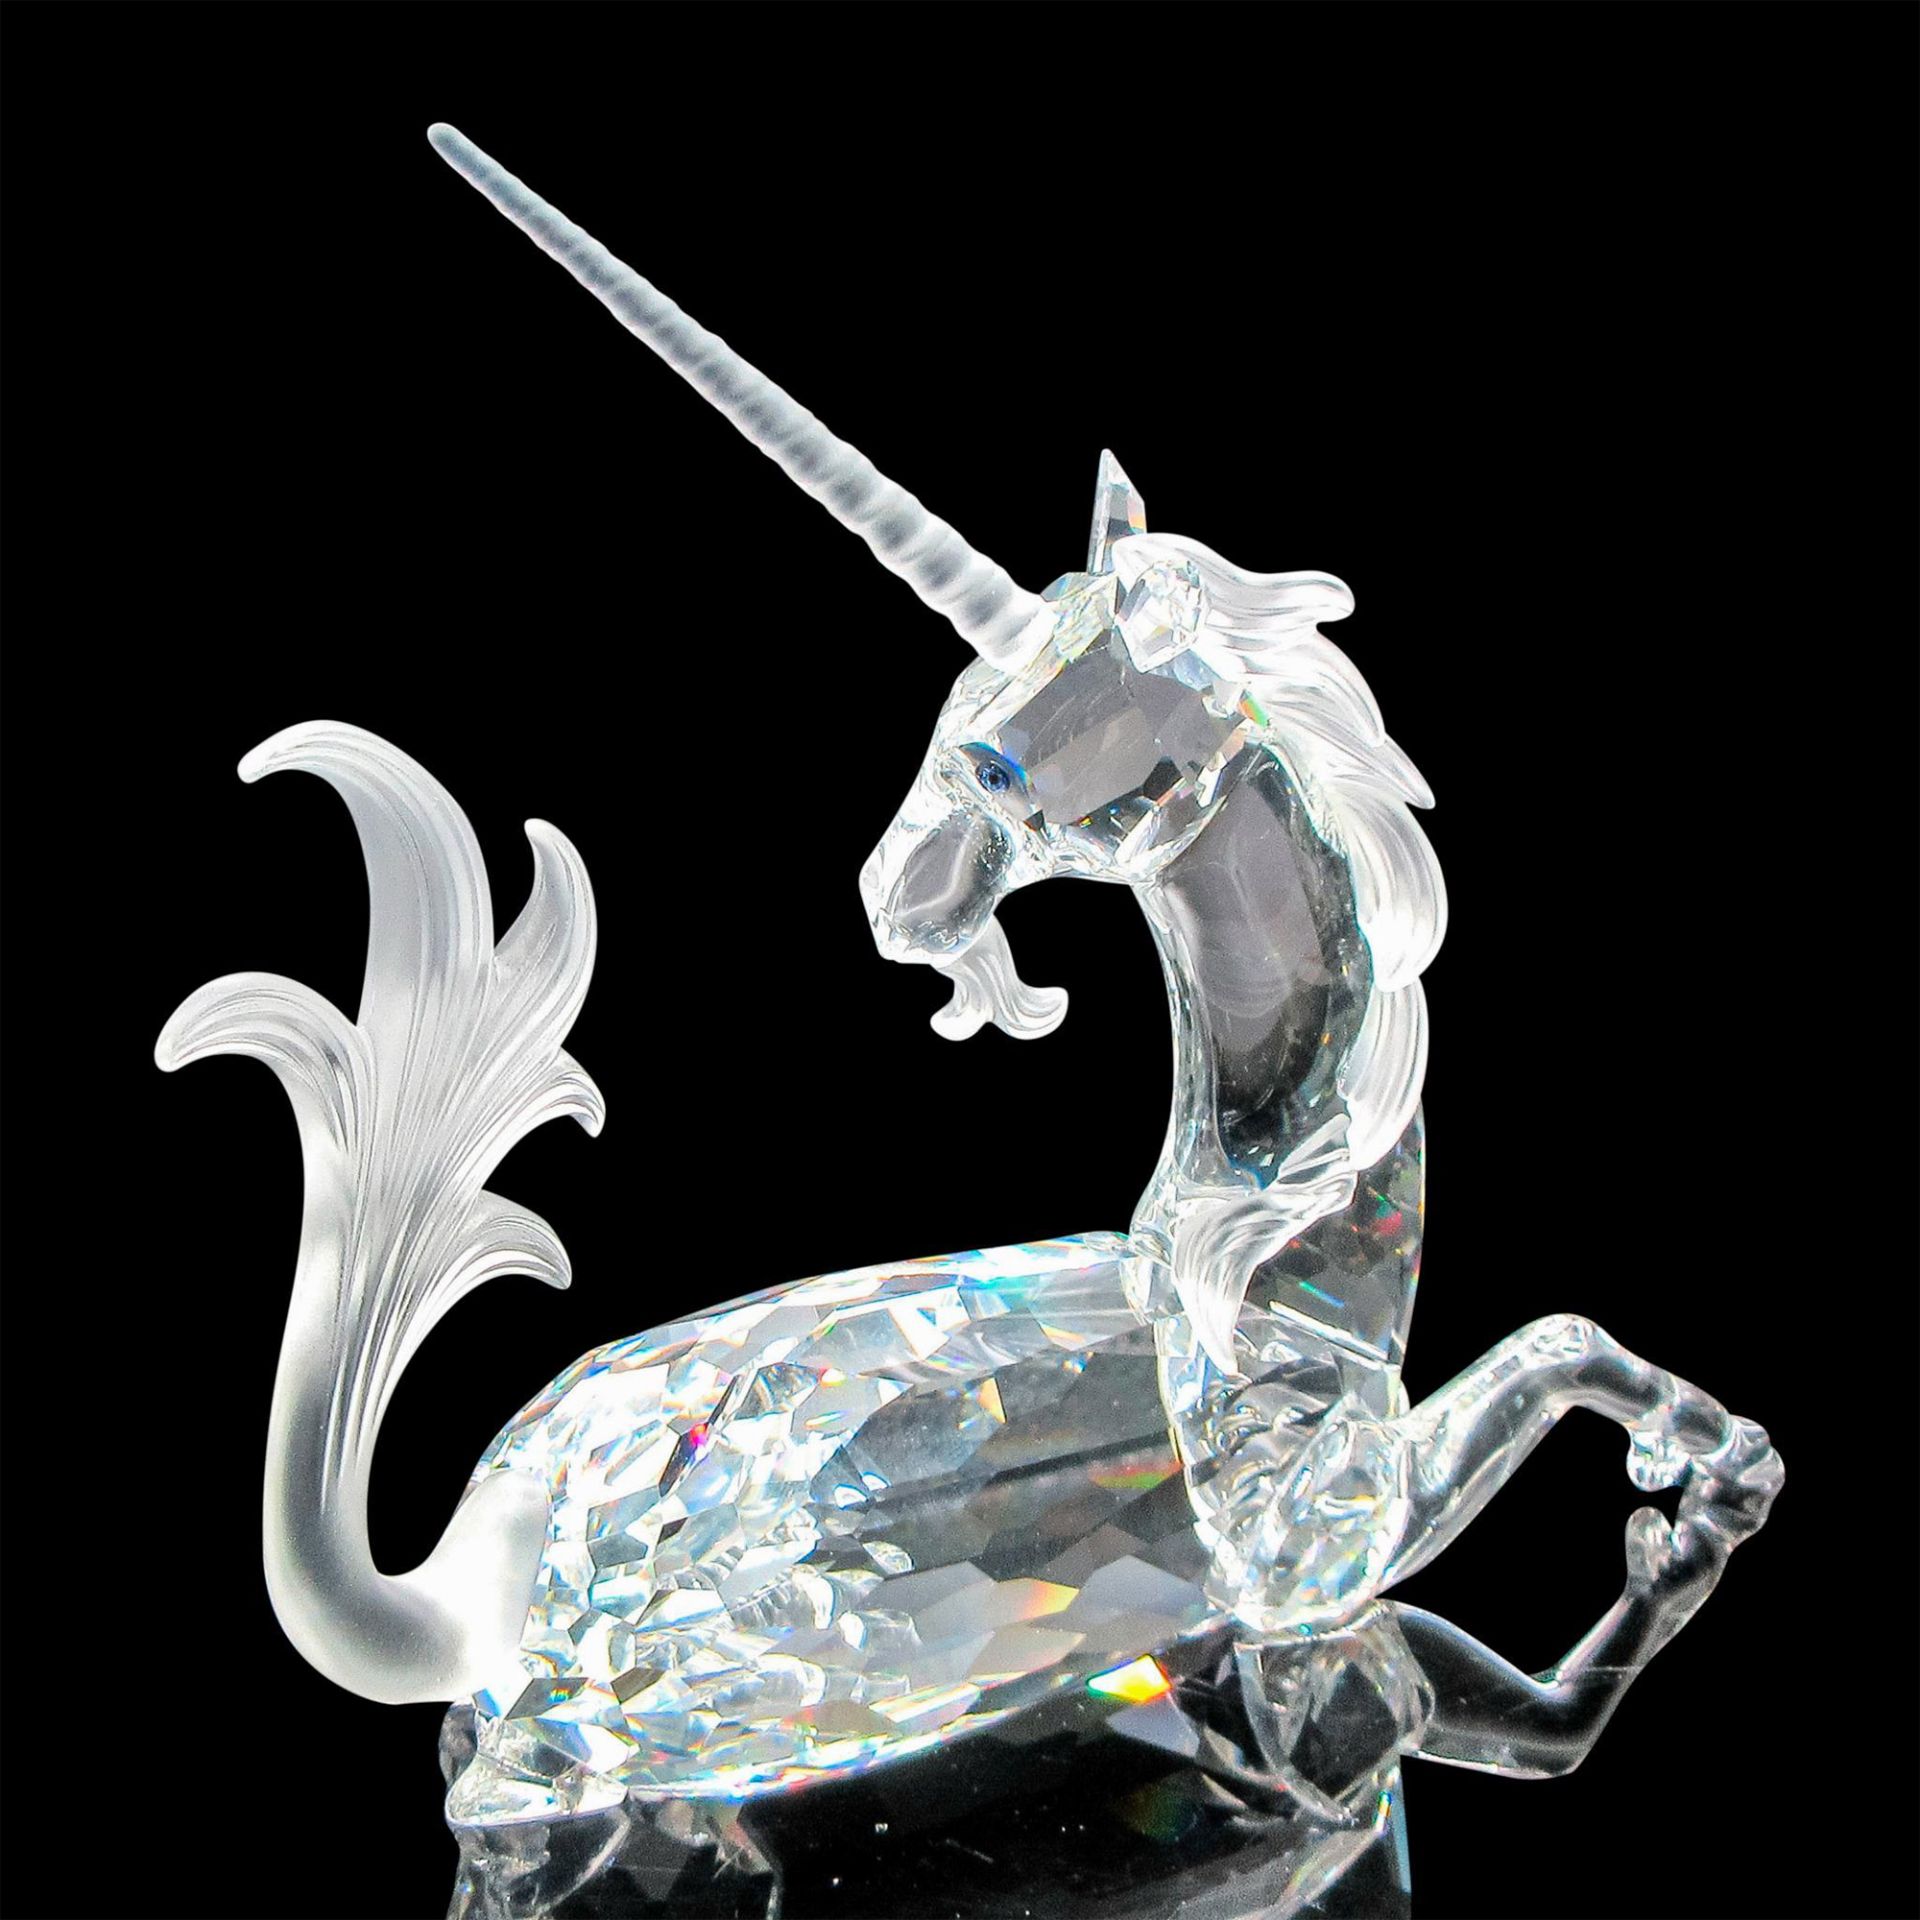 Swarovski Silver Crystal Figurine, The Unicorn - Image 2 of 4